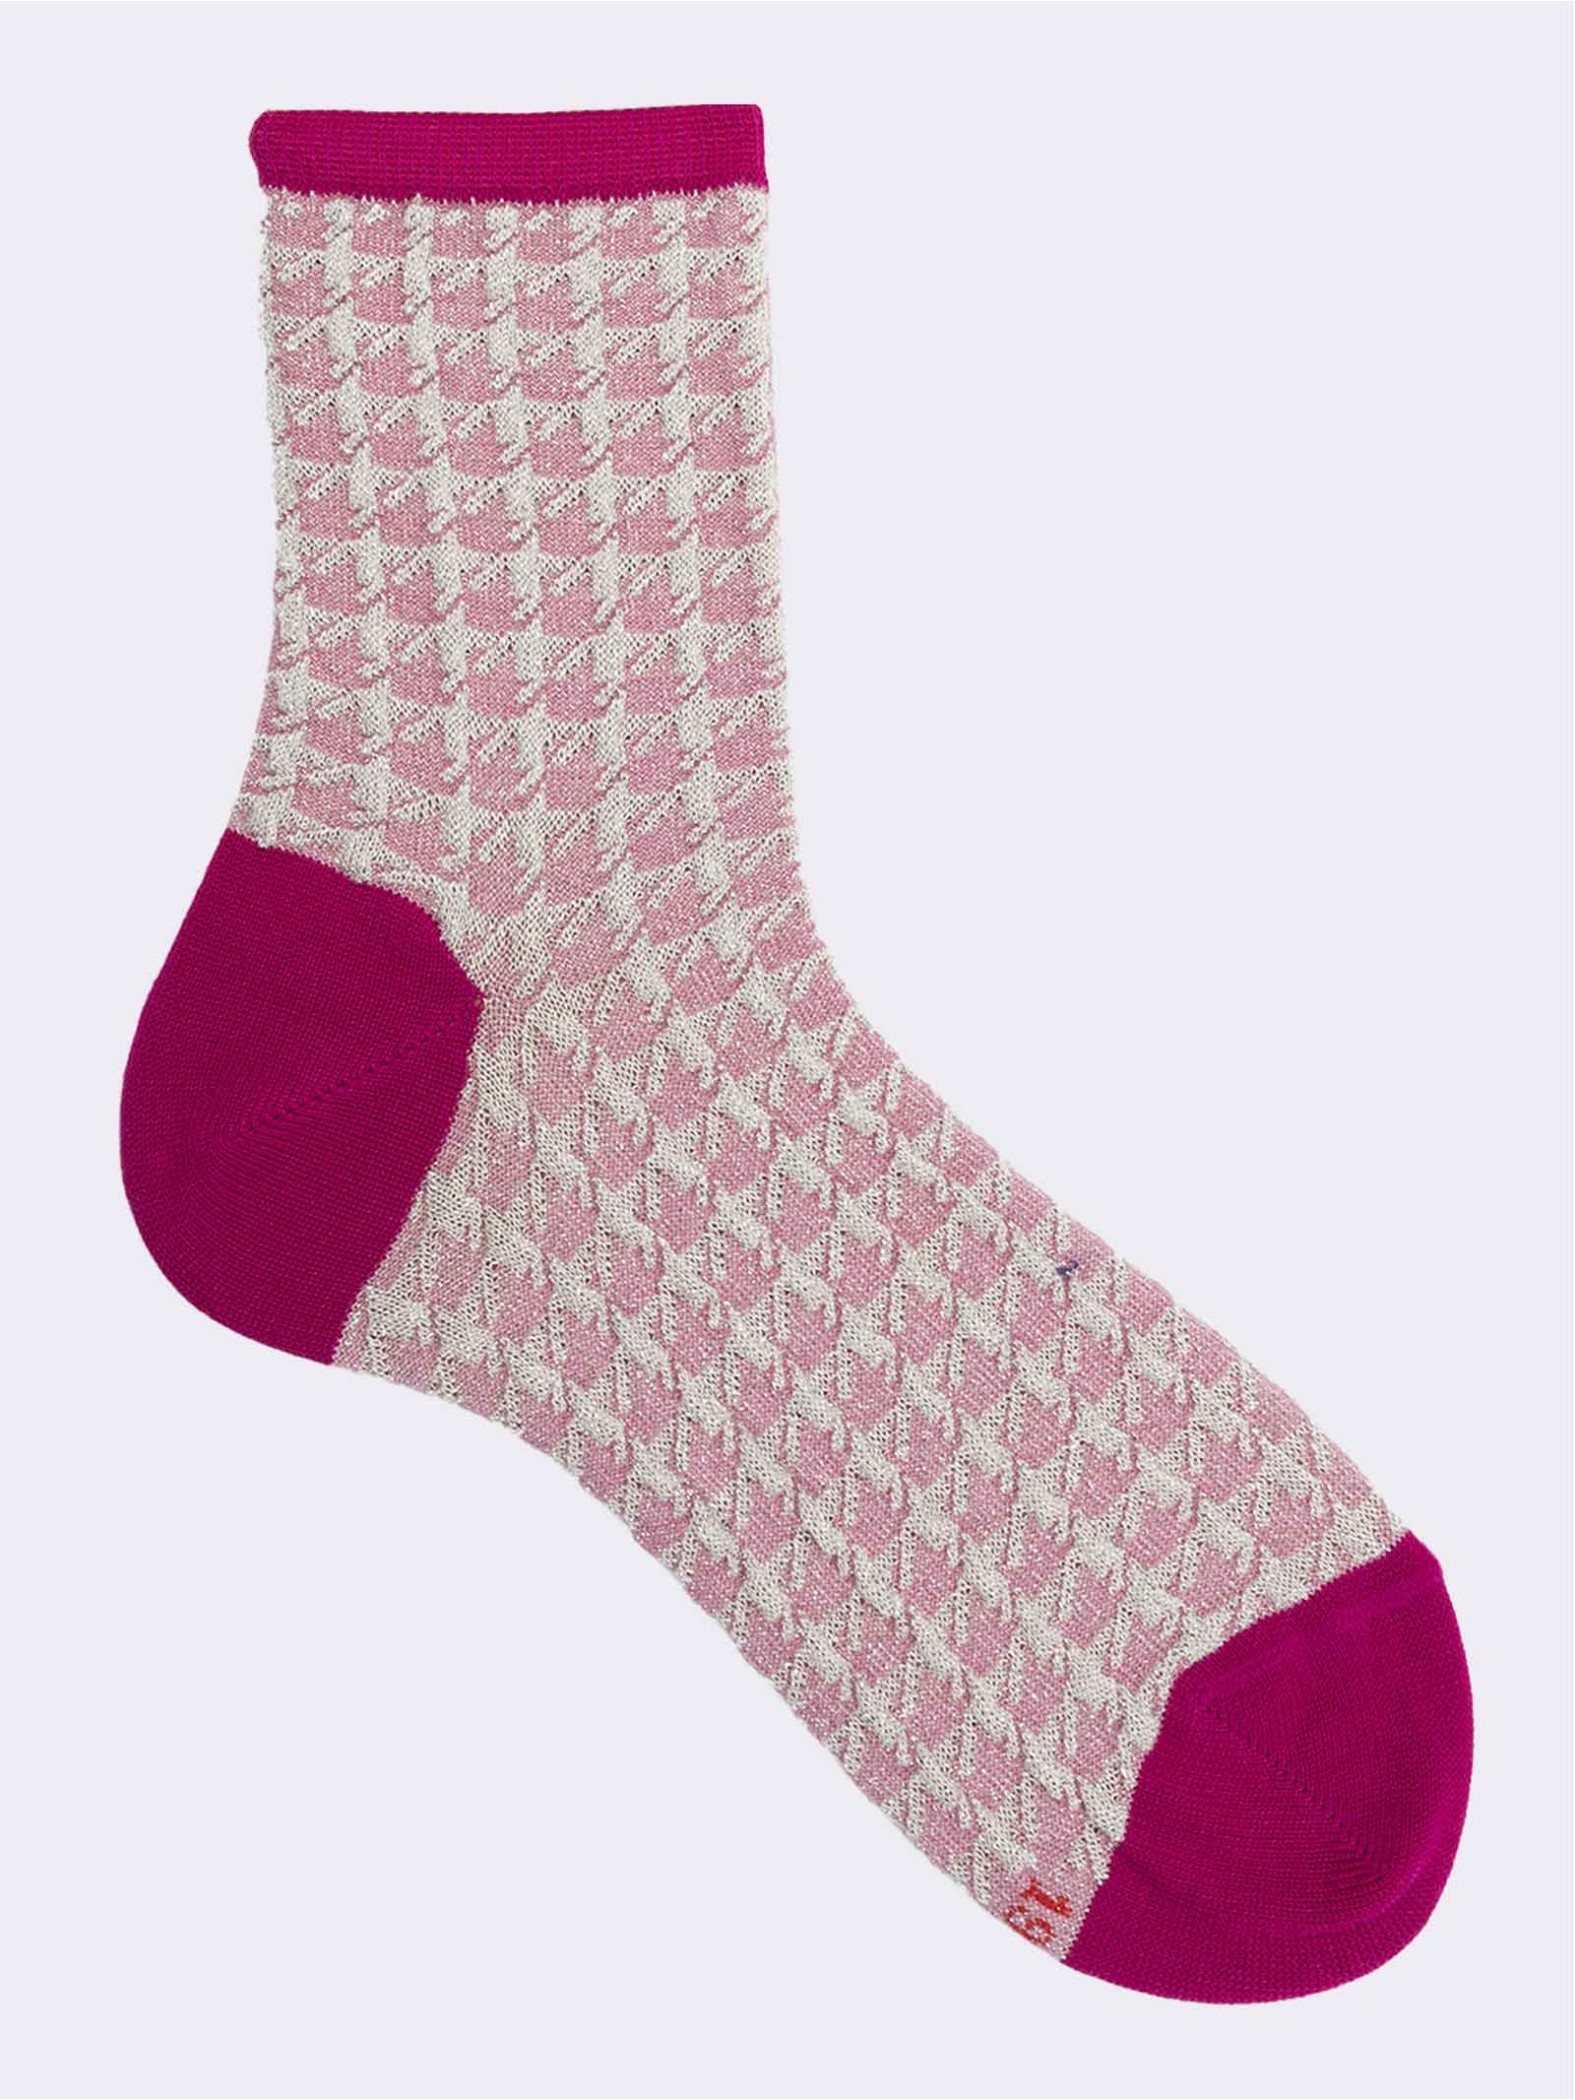 Crew socks with lurex Pied de Poule pattern